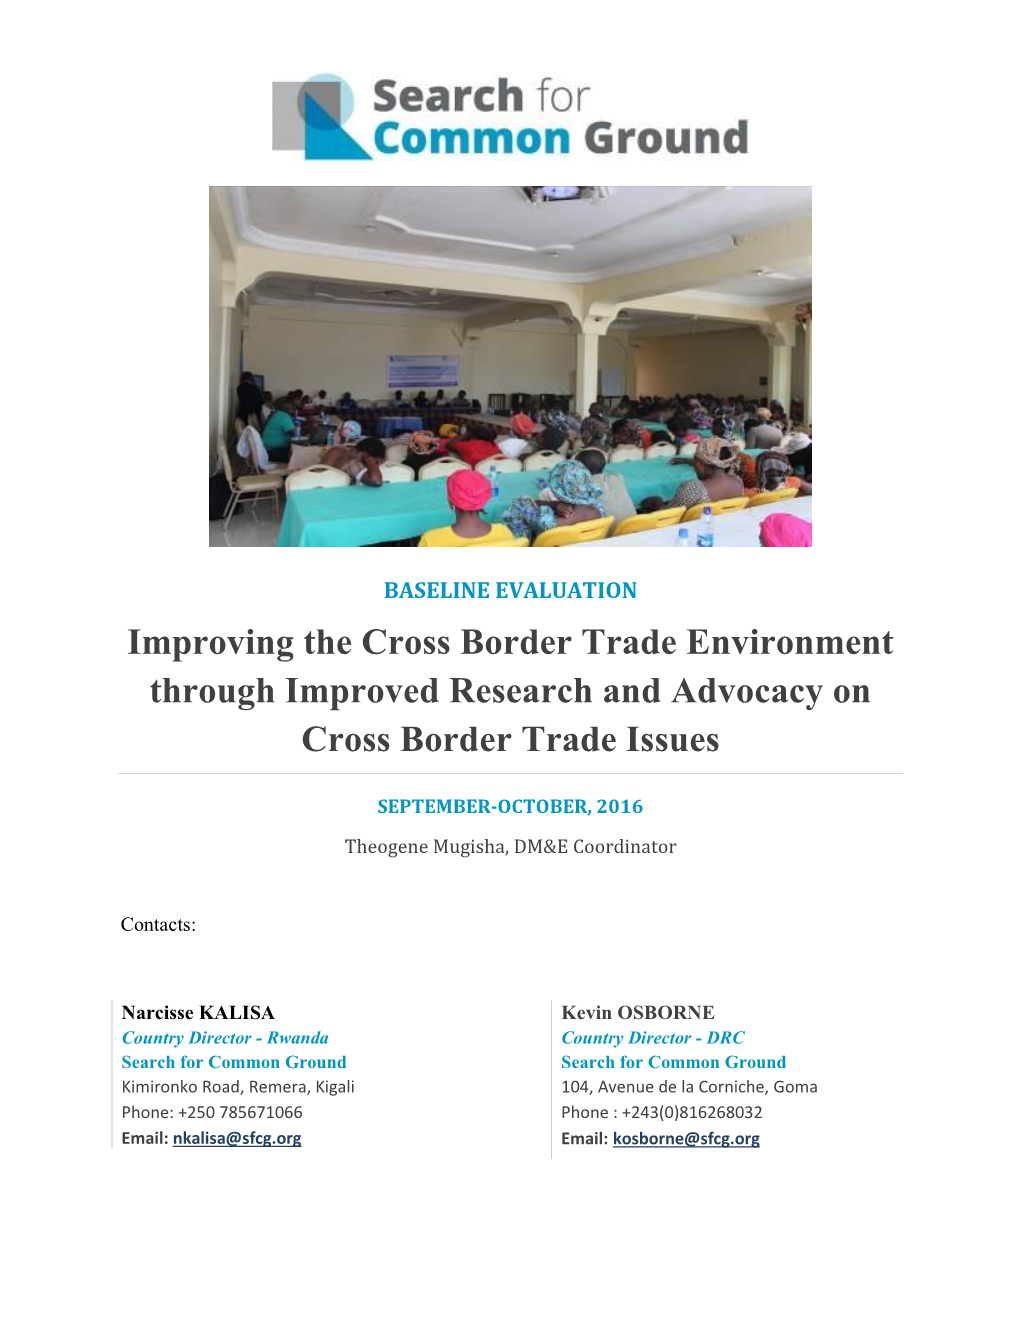 Improving the Cross-Border Trade Environment